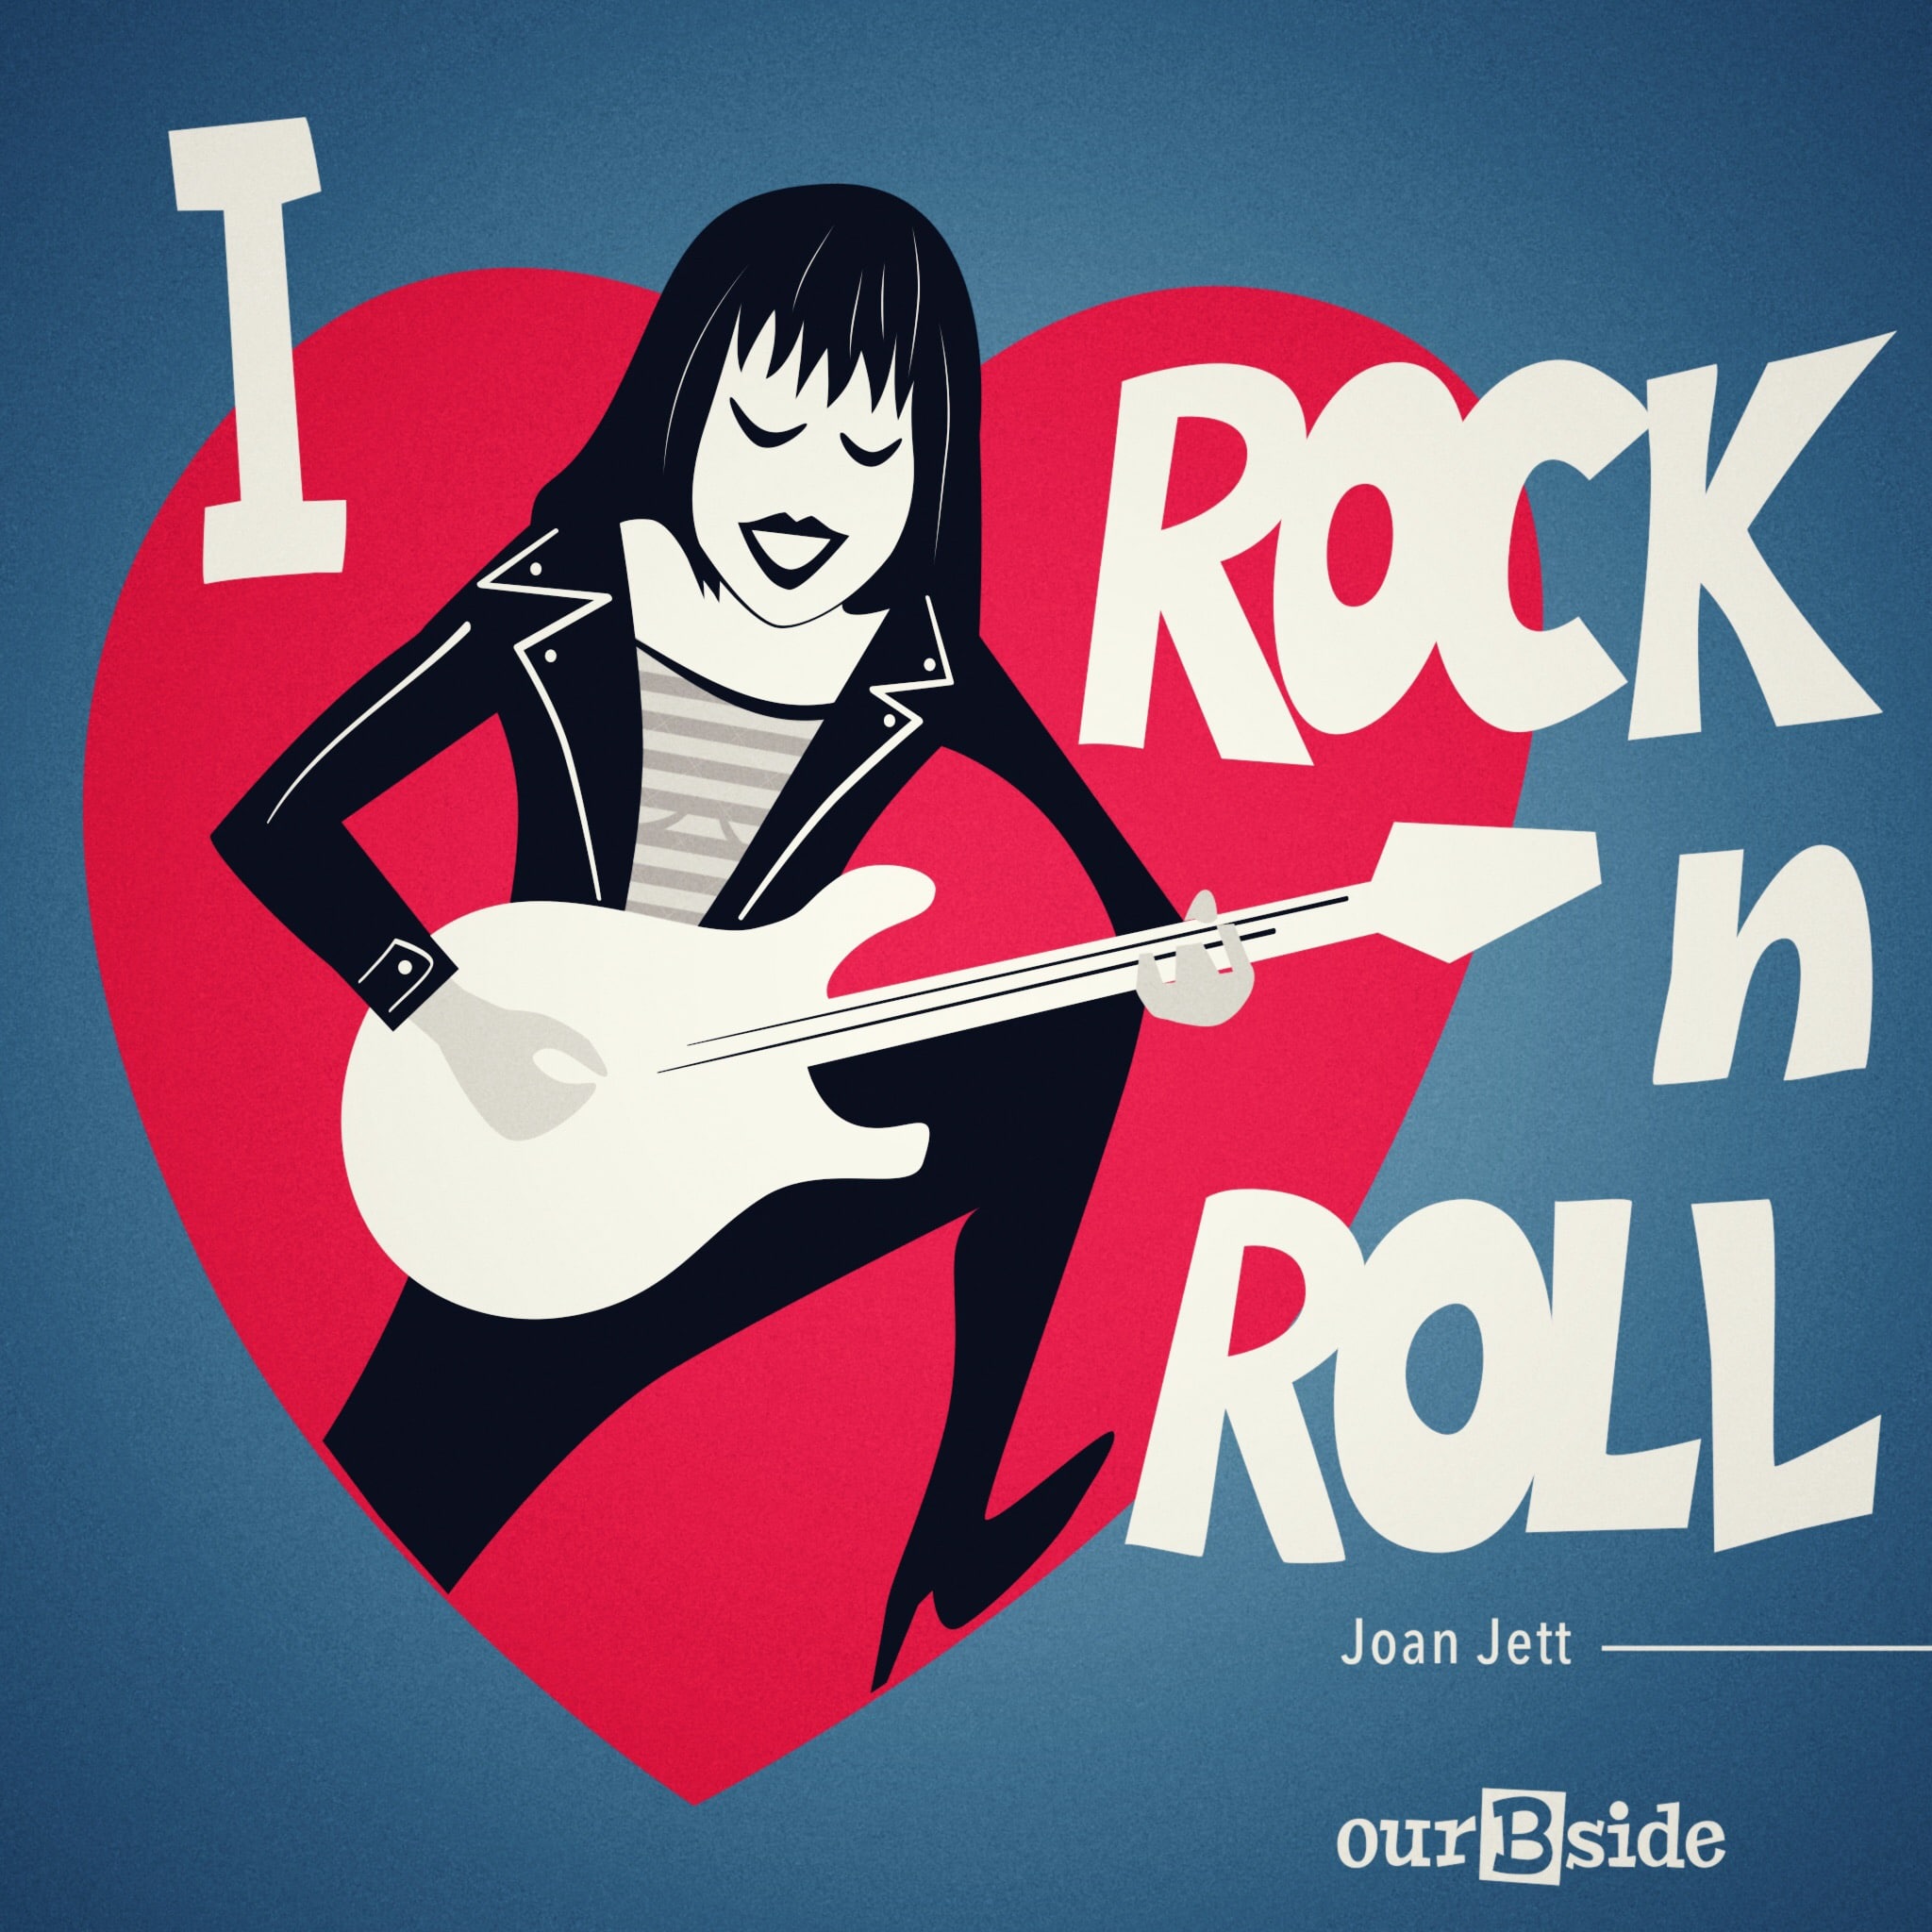 Live n roll. I Love Rock ’n’ Roll (Joan Jett)1982. Постер рок н ролл. Рок н ролл обложка. Обложки ретро рок-н ролл.